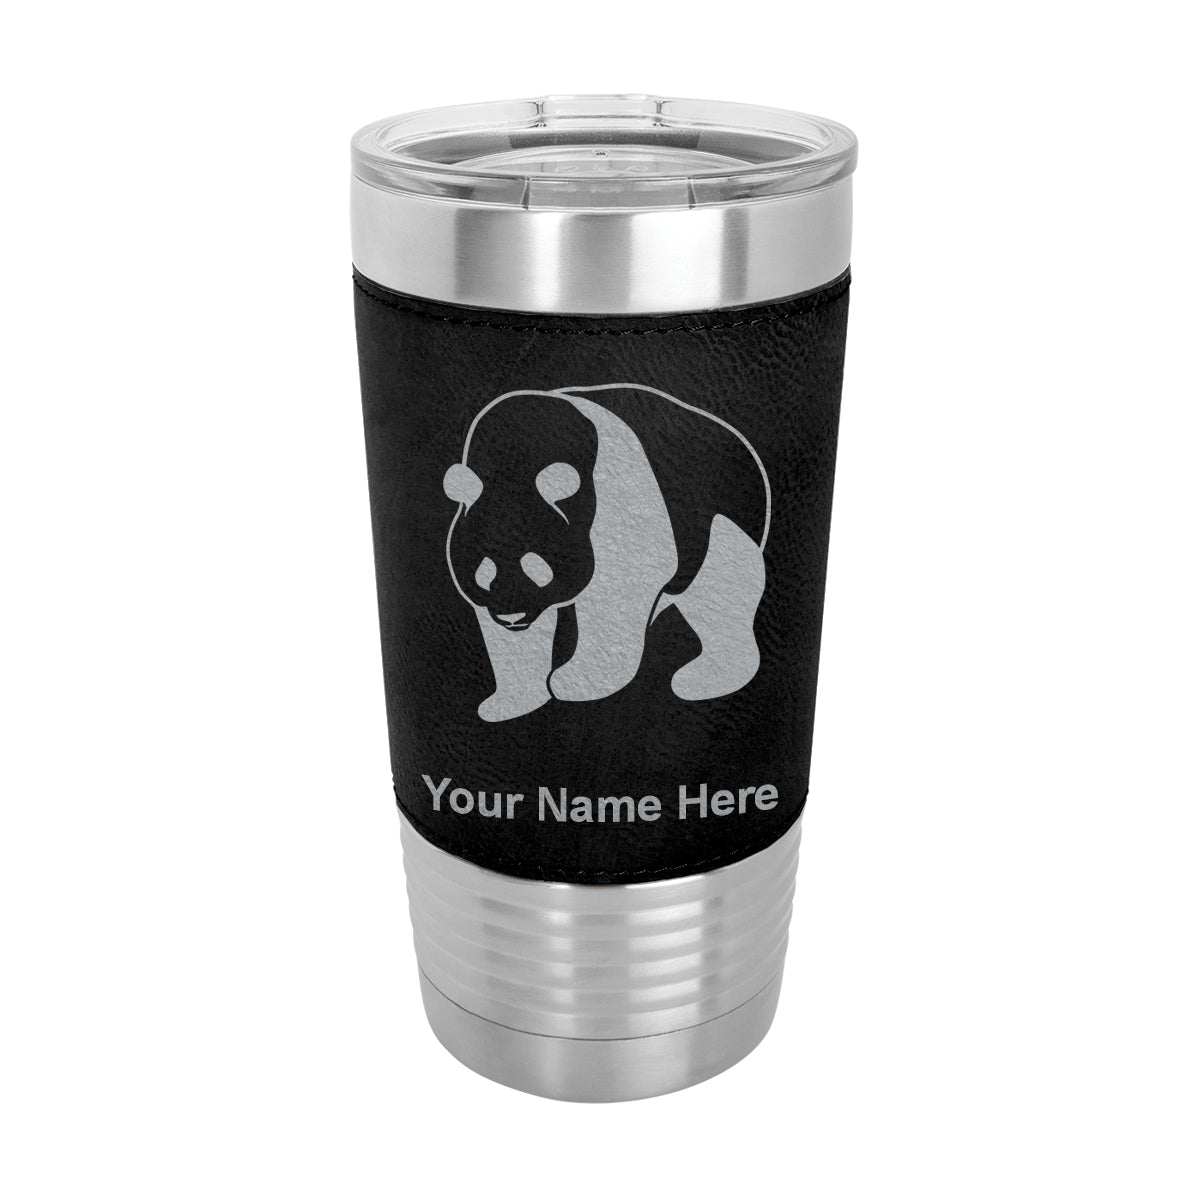 20oz Faux Leather Tumbler Mug, Panda Bear, Personalized Engraving Included - LaserGram Custom Engraved Gifts